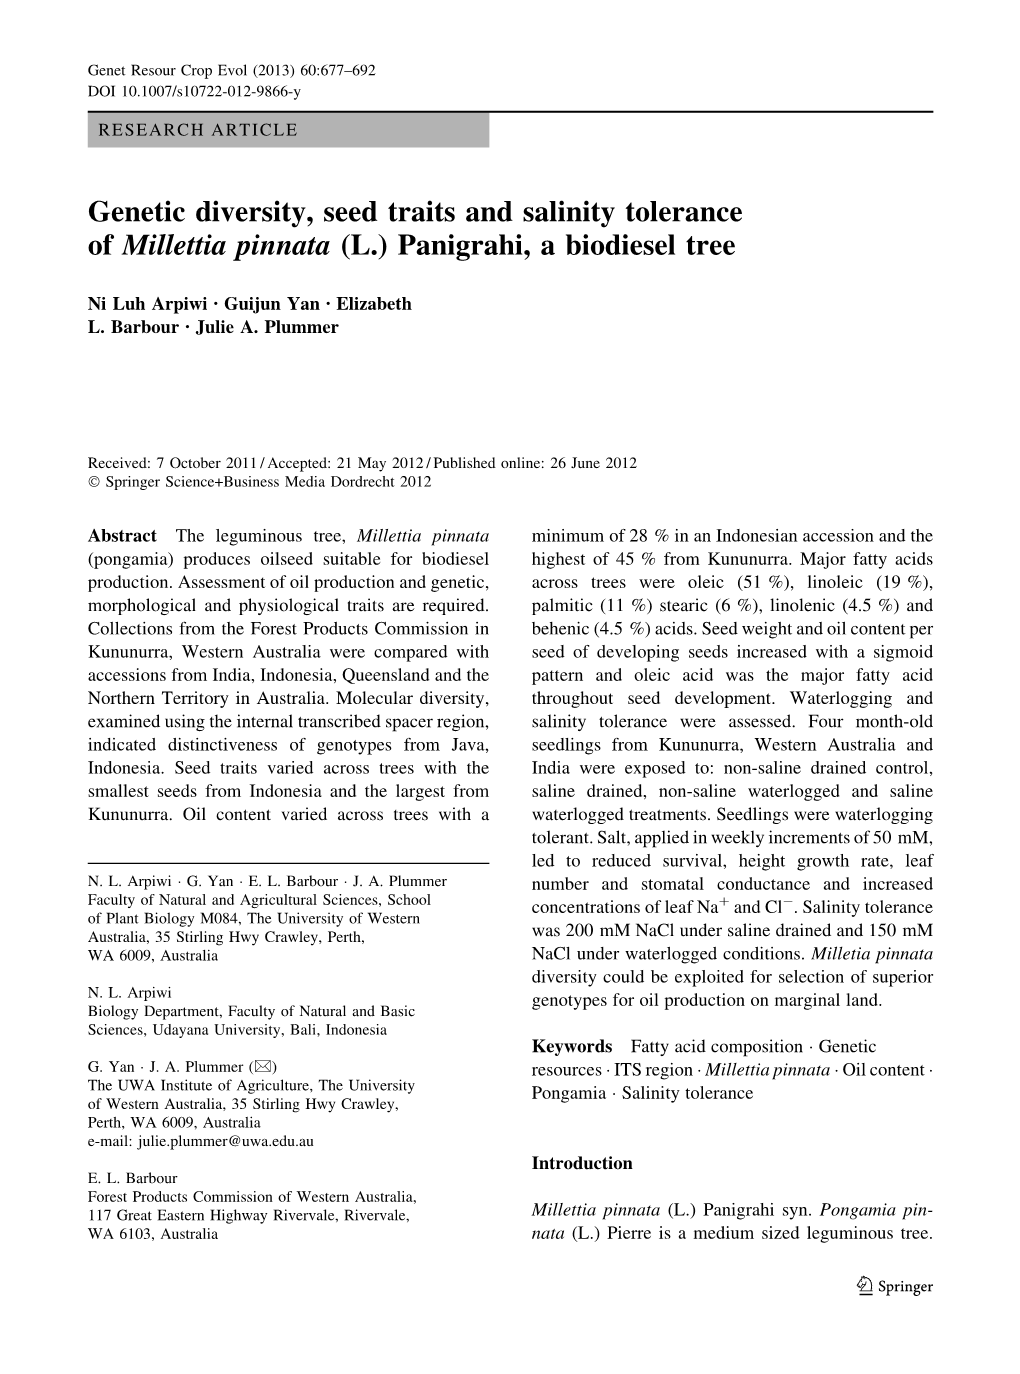 Genetic Diversity, Seed Traits and Salinity Tolerance of Millettia Pinnata (L.) Panigrahi, a Biodiesel Tree